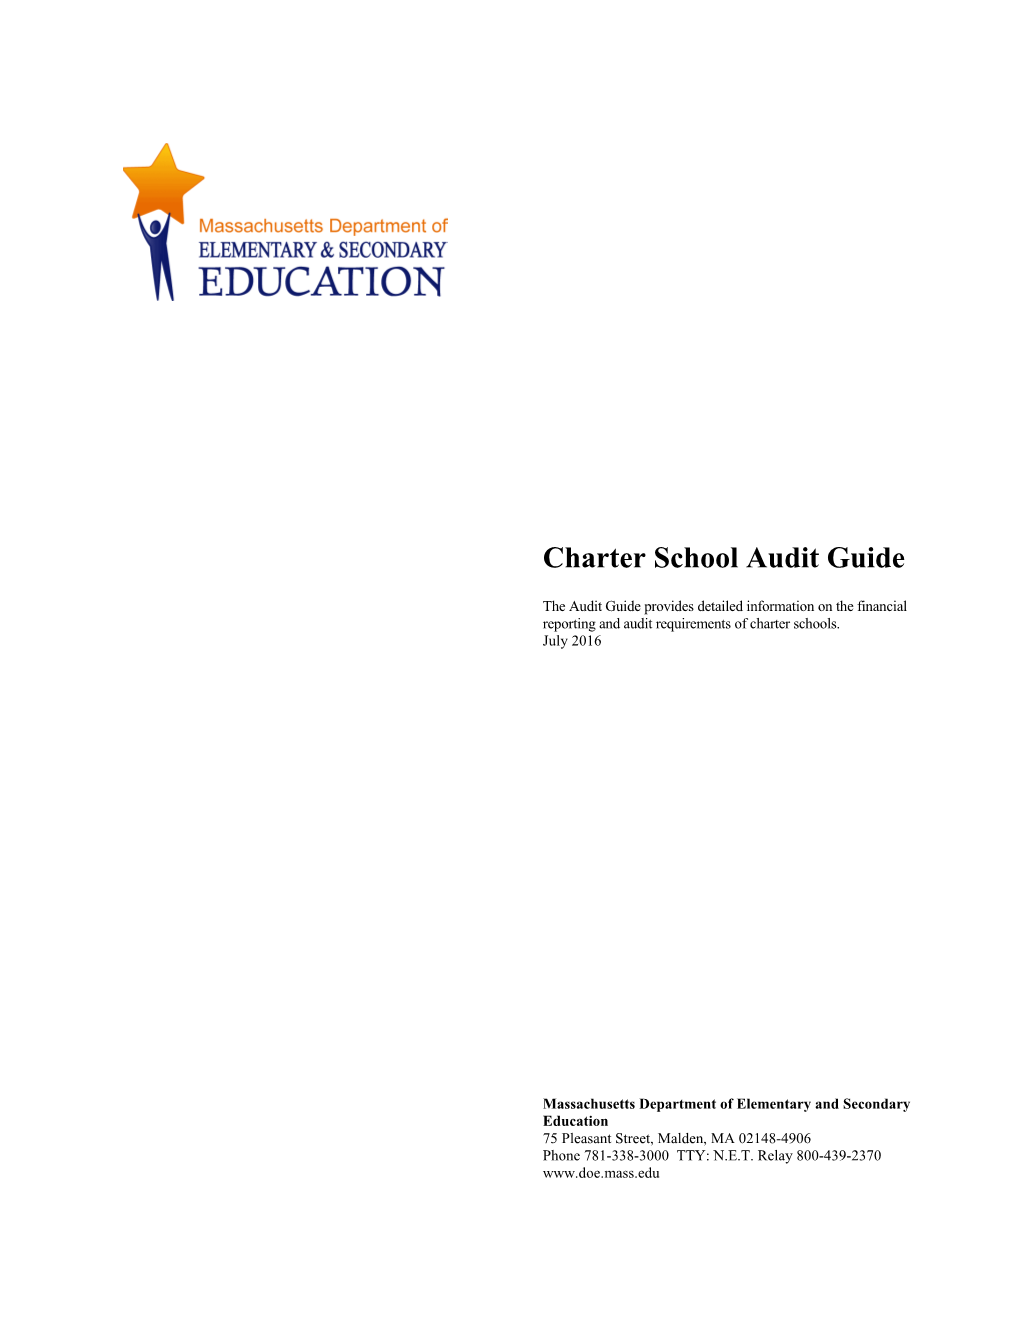 Charter School Audit Guide, July 2016